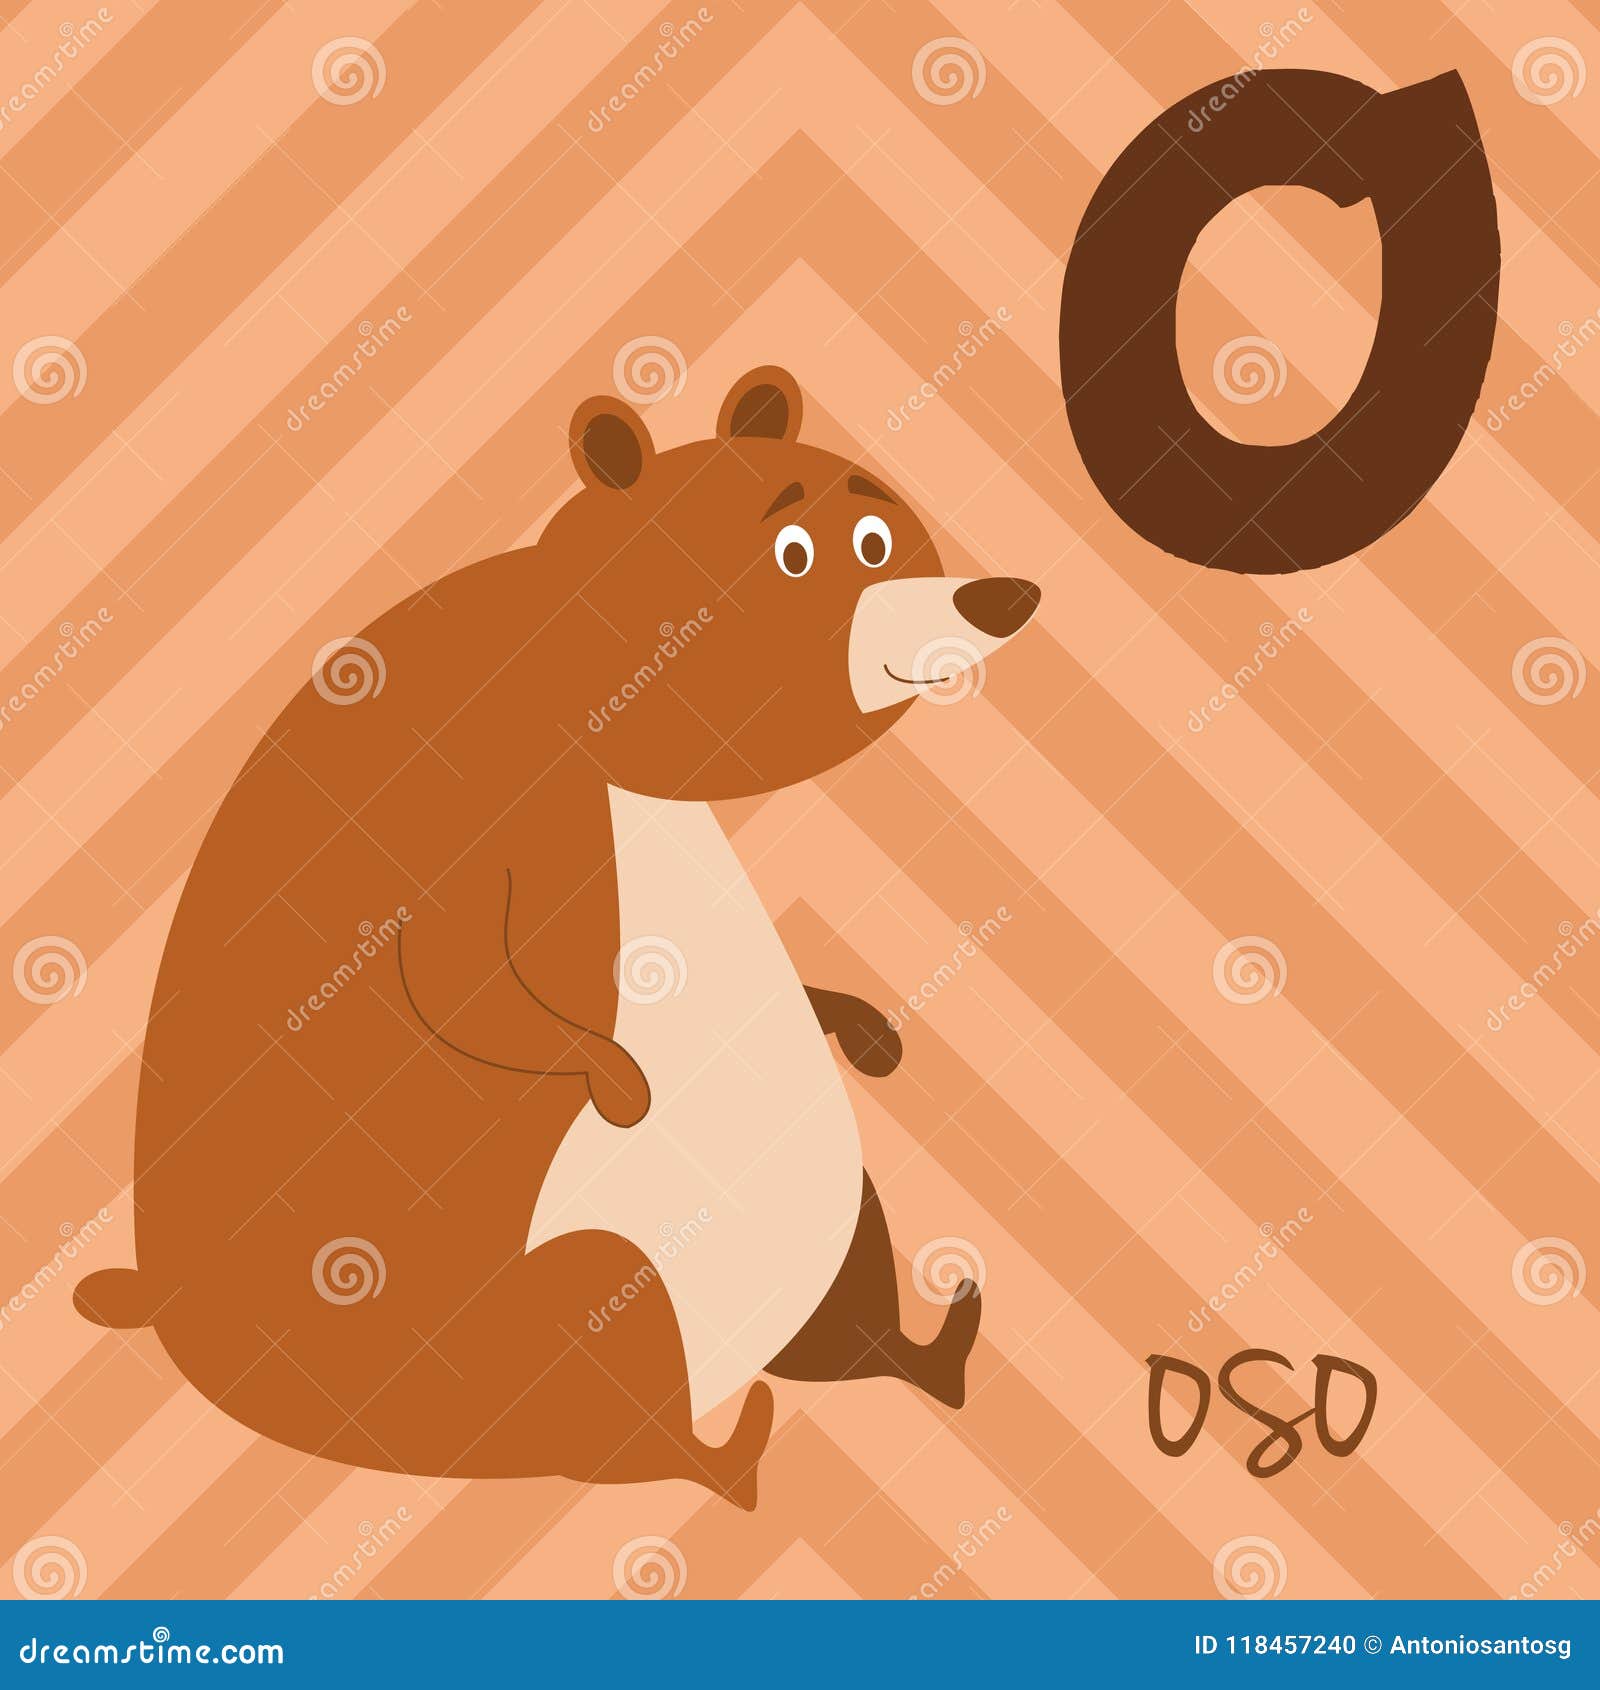 cute cartoon zoo illustrated alphabet with funny animals. spanish alphabet: o for oso.